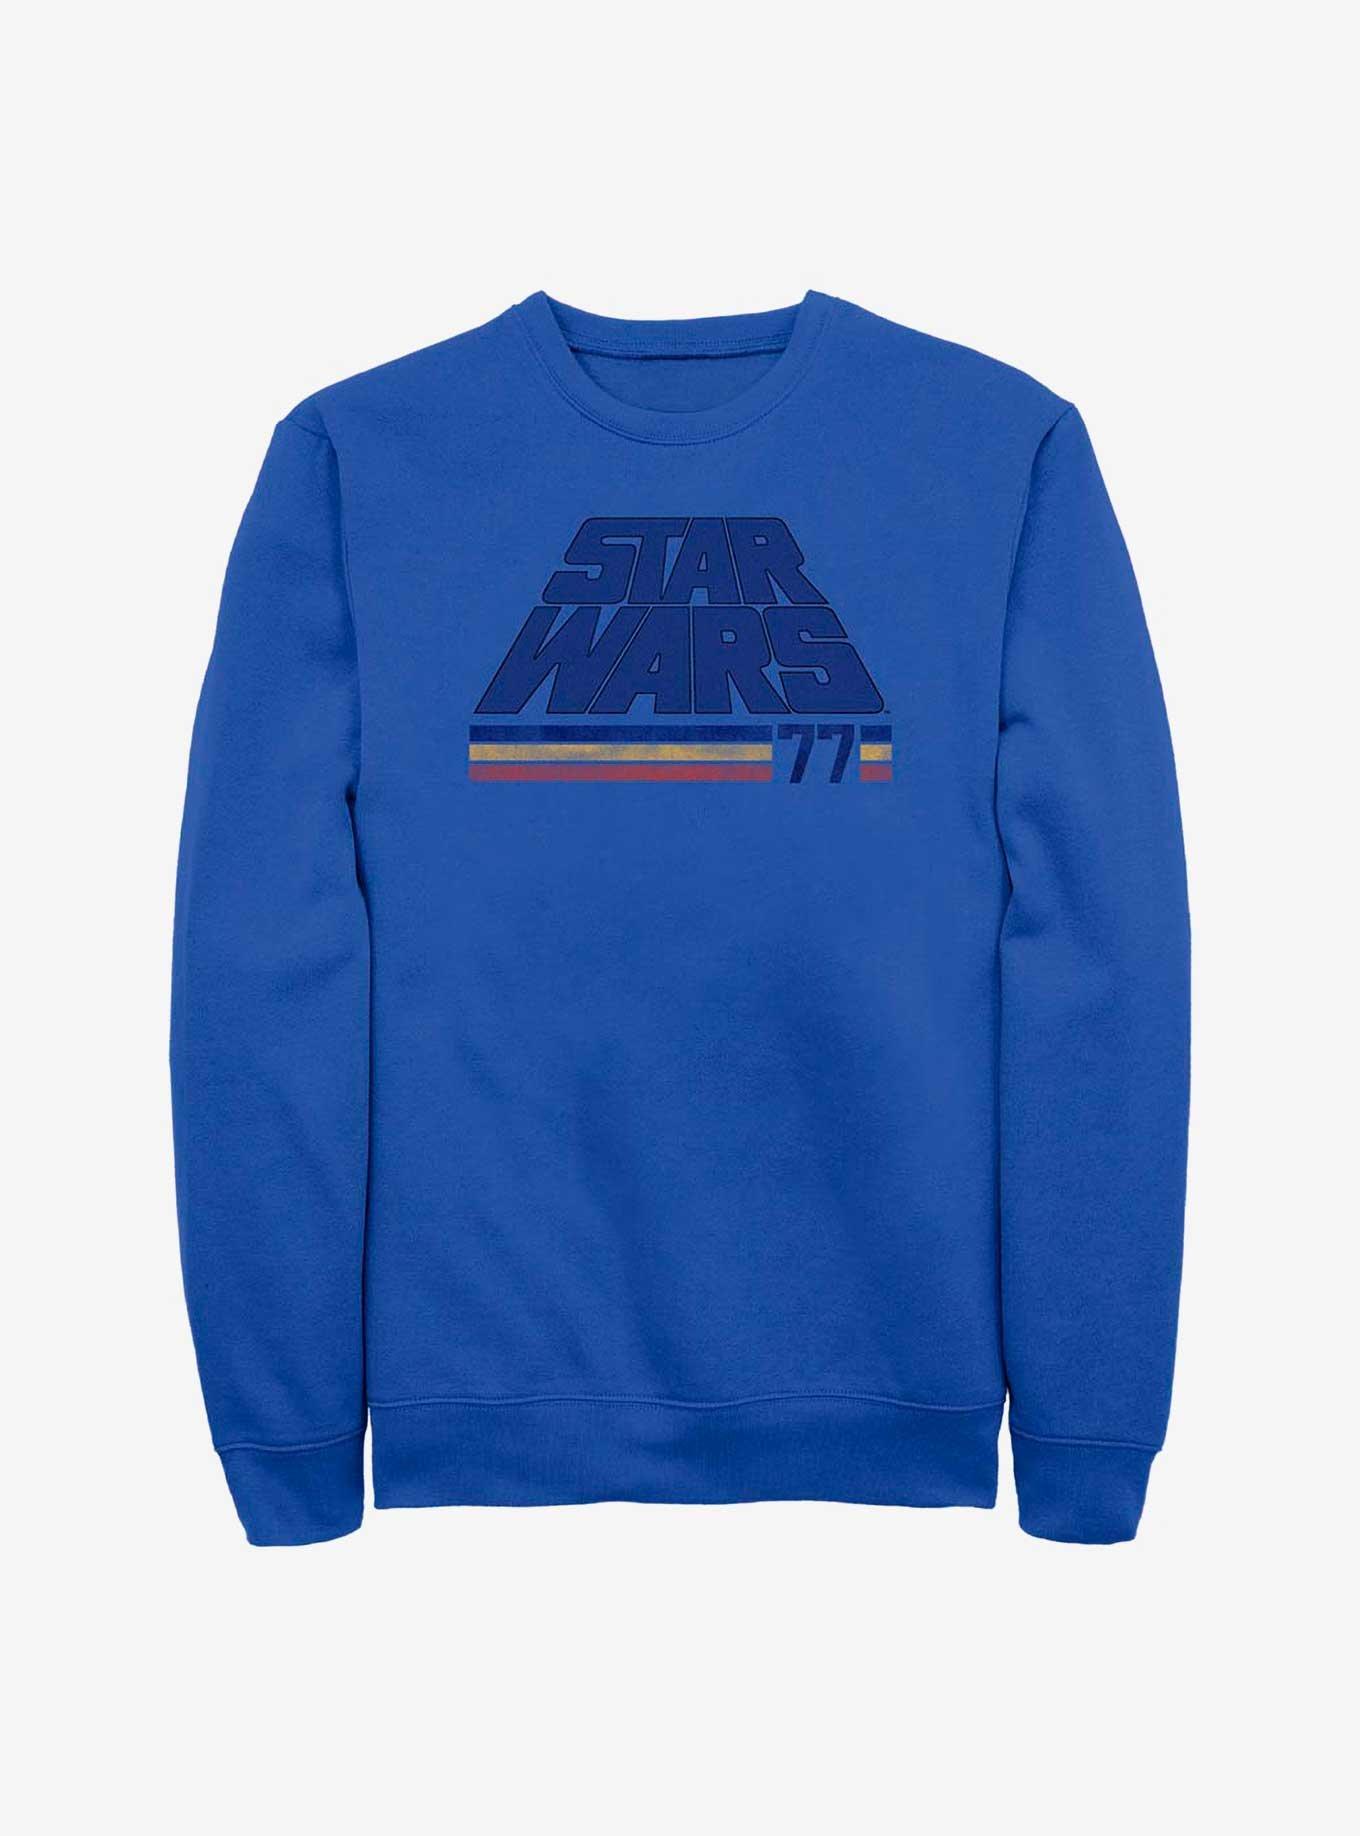 Star Wars Distressed Sweatshirt, ROYAL, hi-res